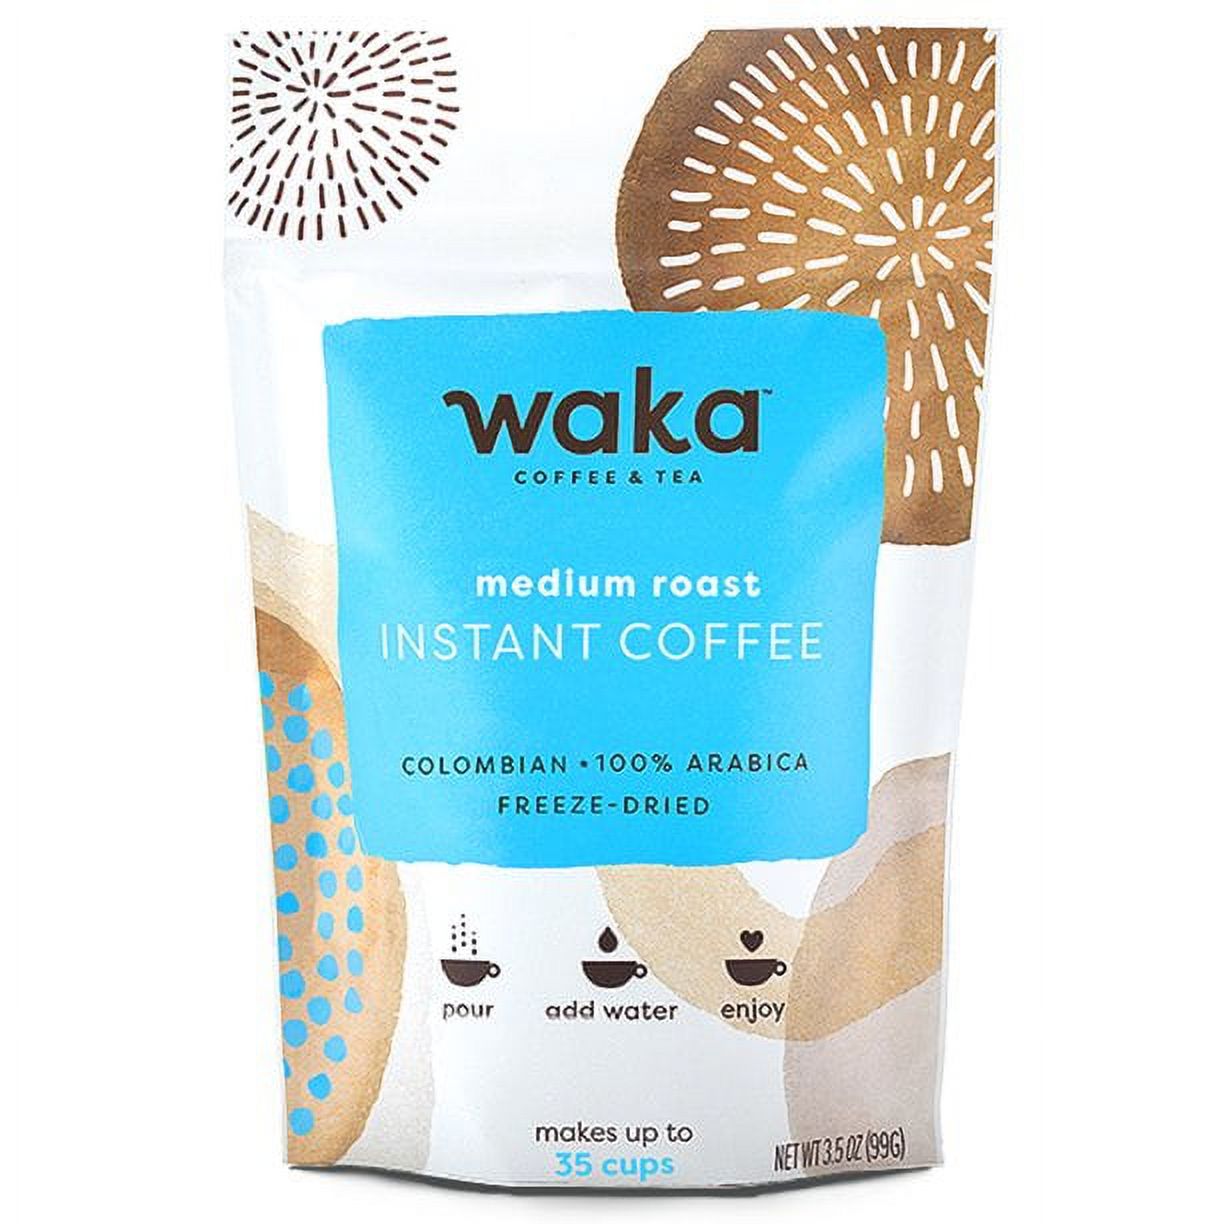 Waka Coffee 100% Columbian Arabica Medium Roast Instant Coffee, 3.5 oz Bag - image 1 of 6